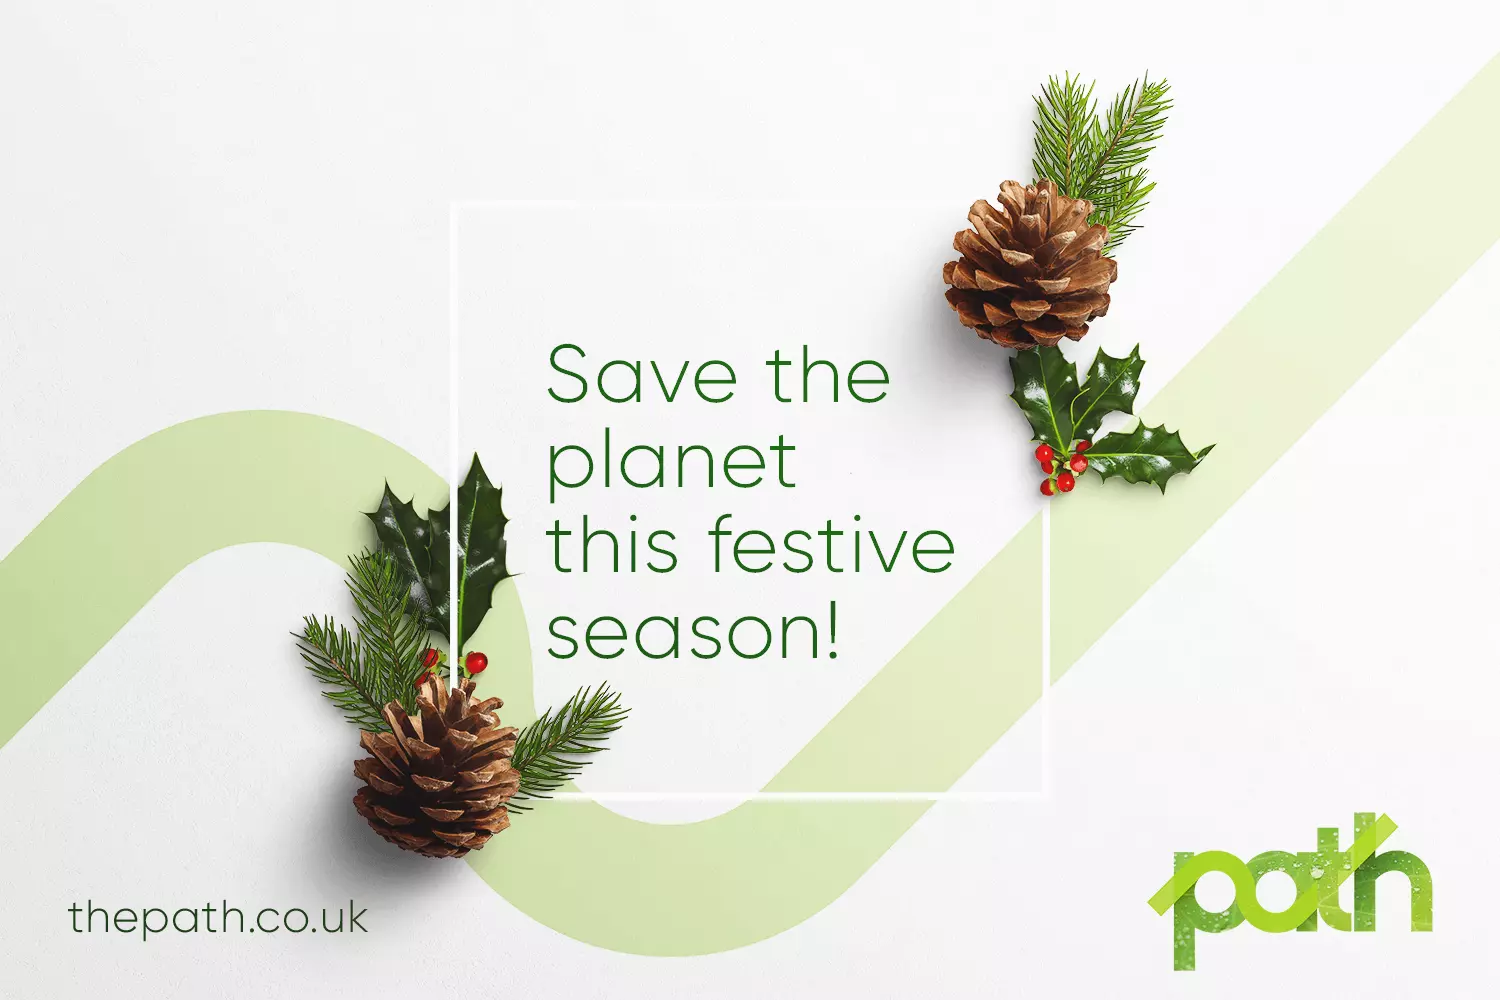 Save the planet this festive season